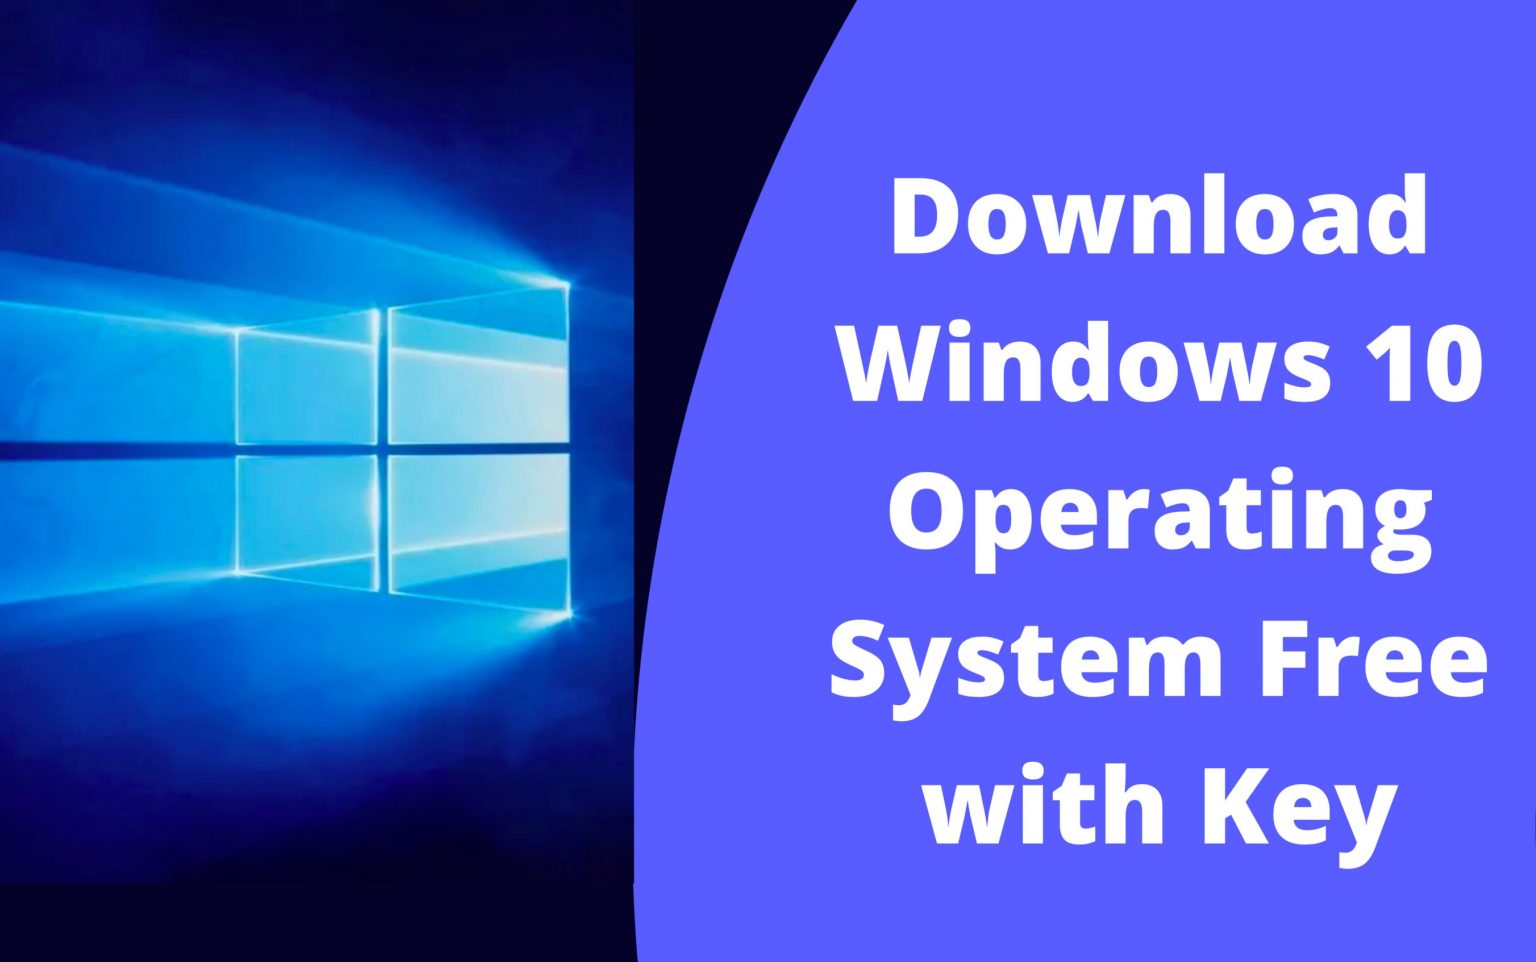 microsoft windows 10 free download